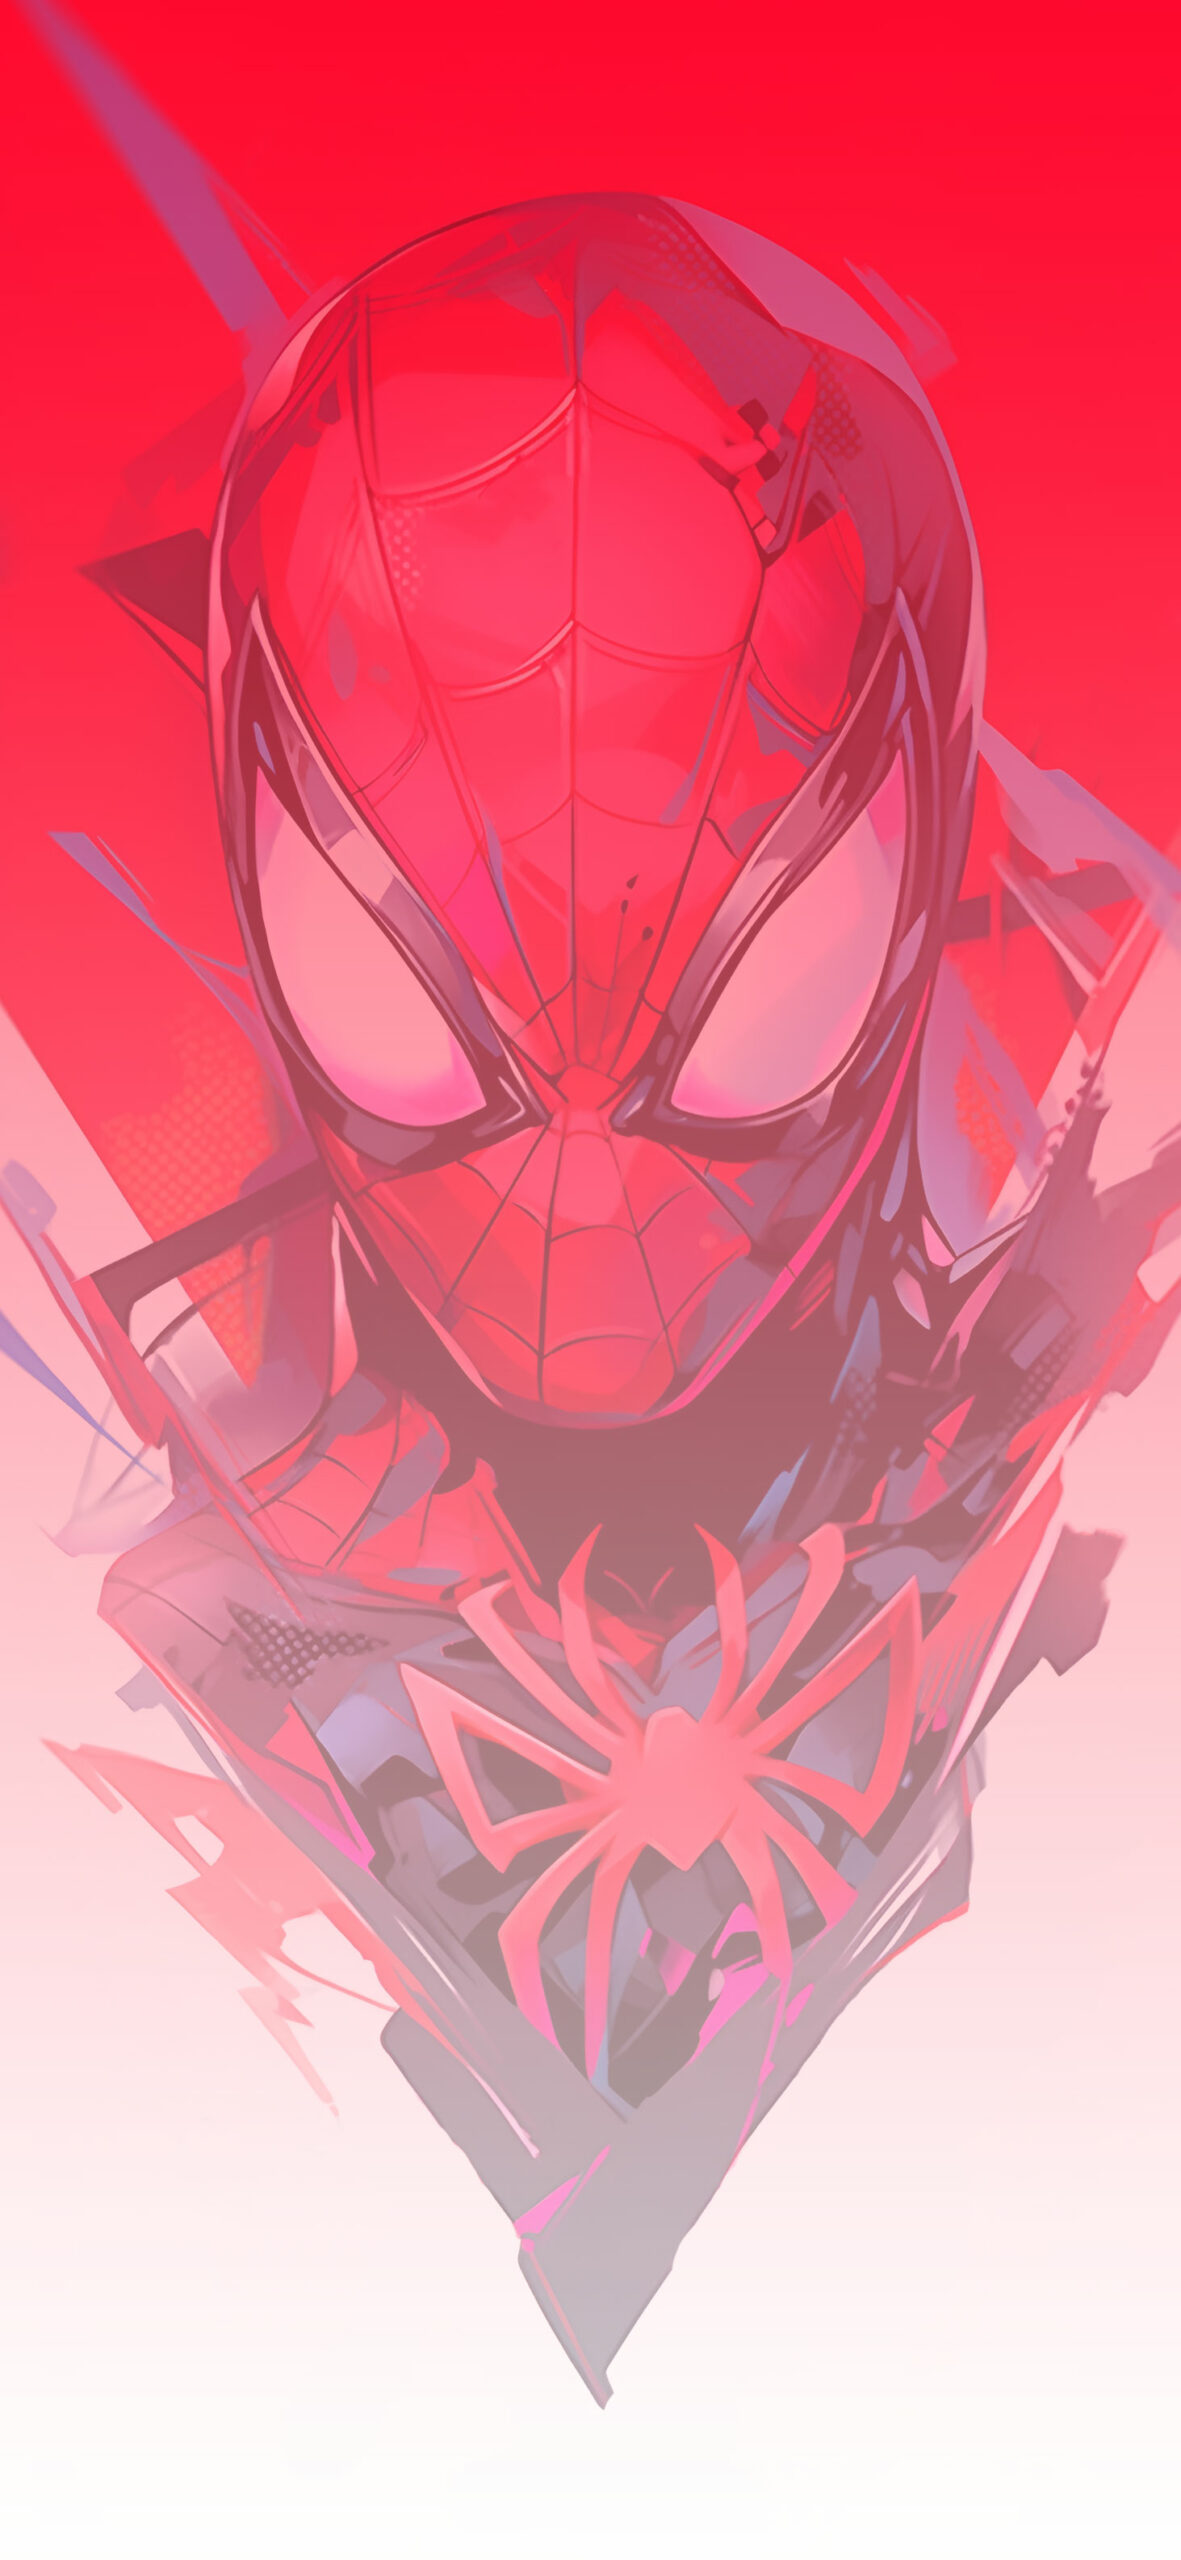 Spider Man abstract red & white wallpaper Marvel art wallpaper